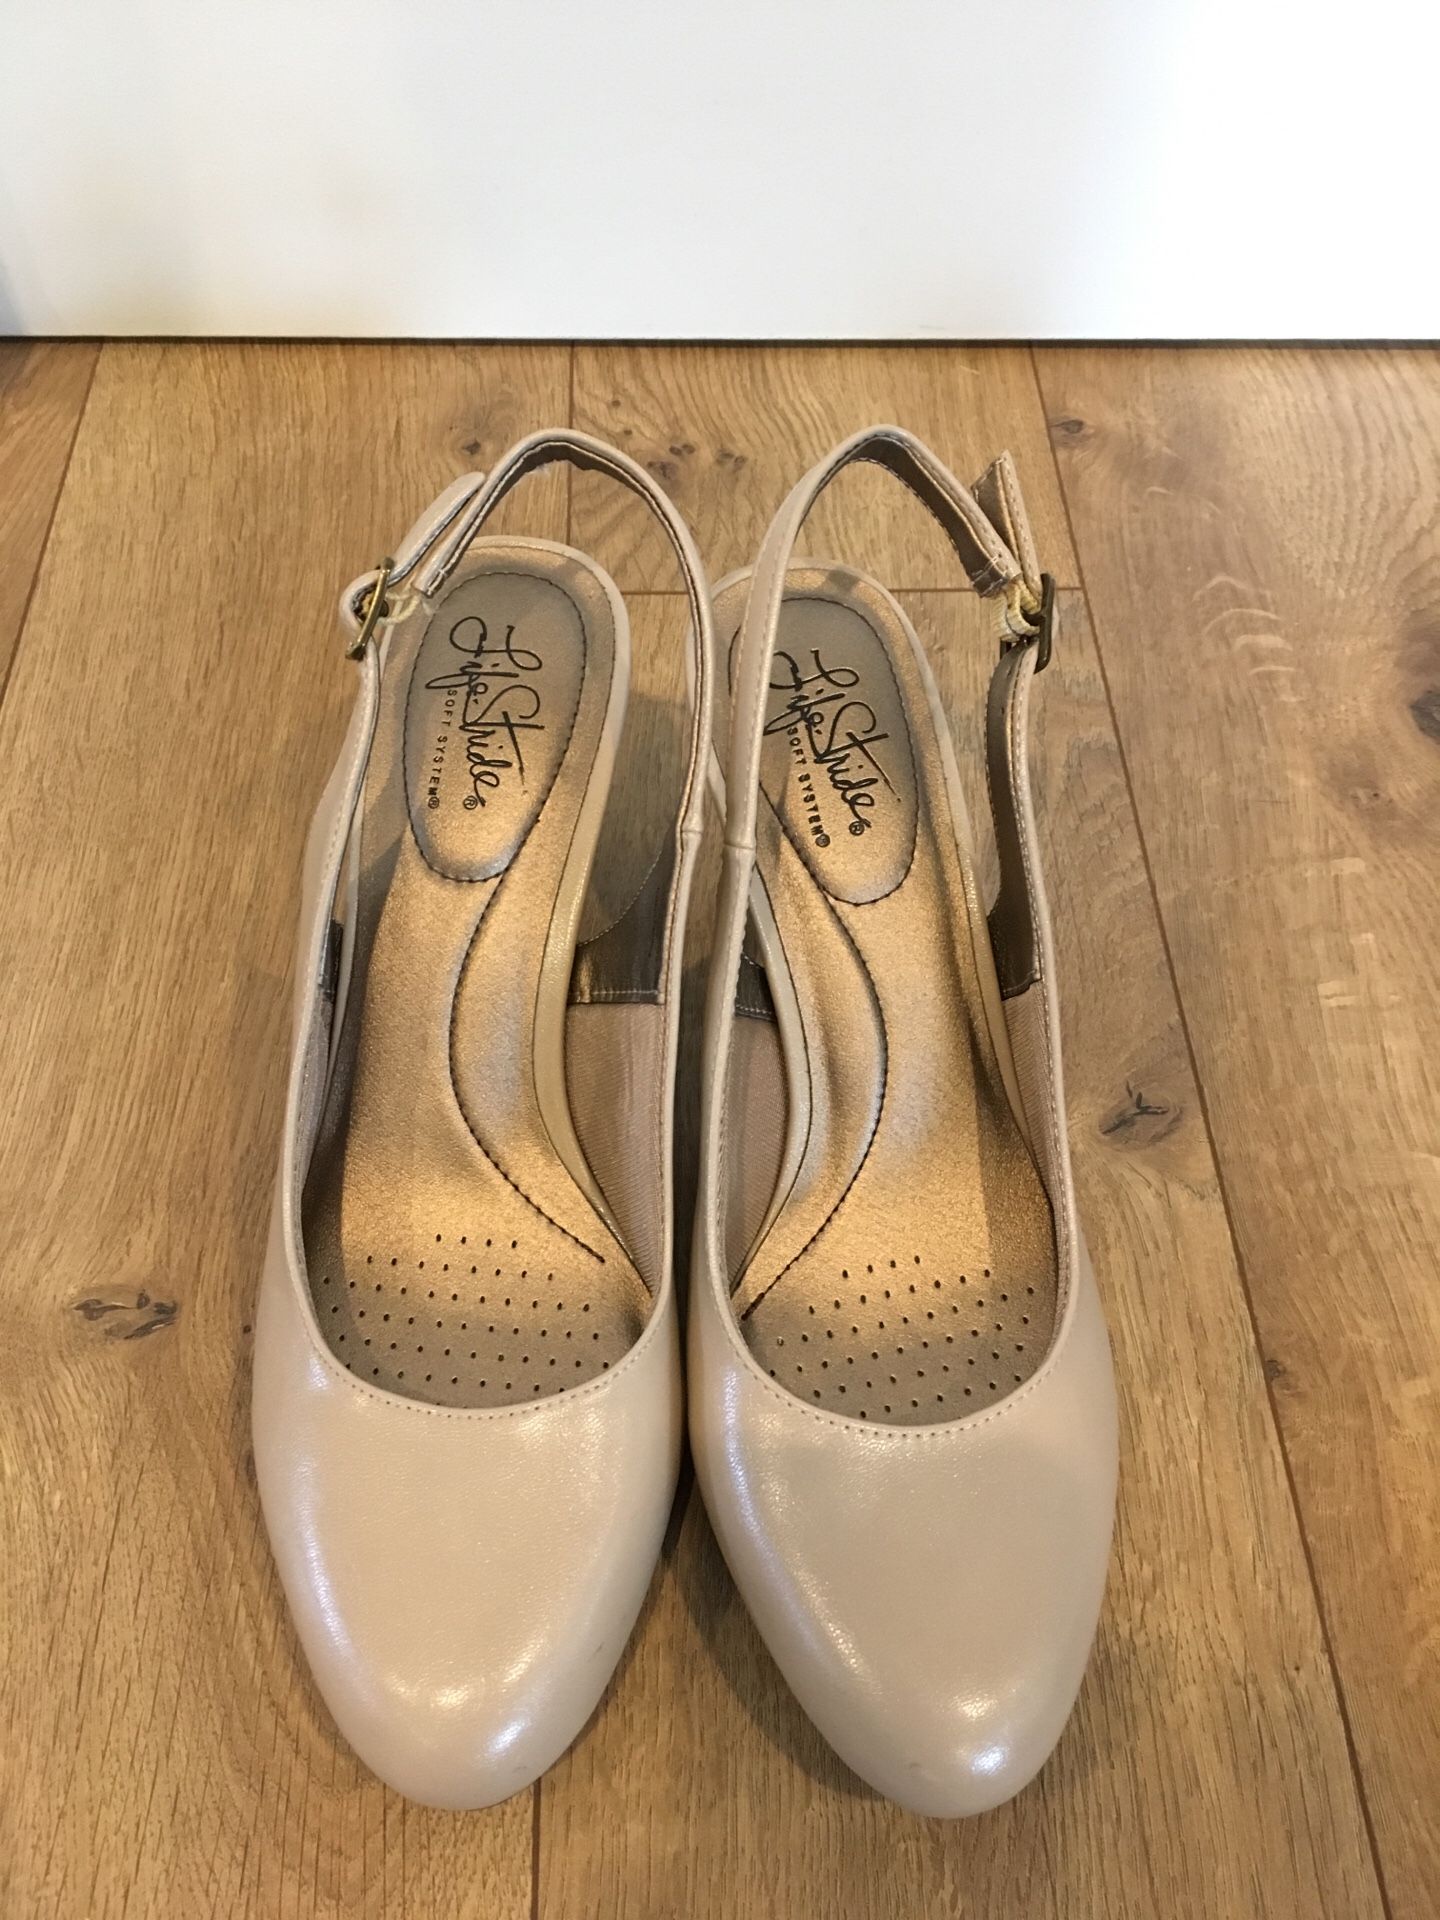 Life Stride beige heels size 10